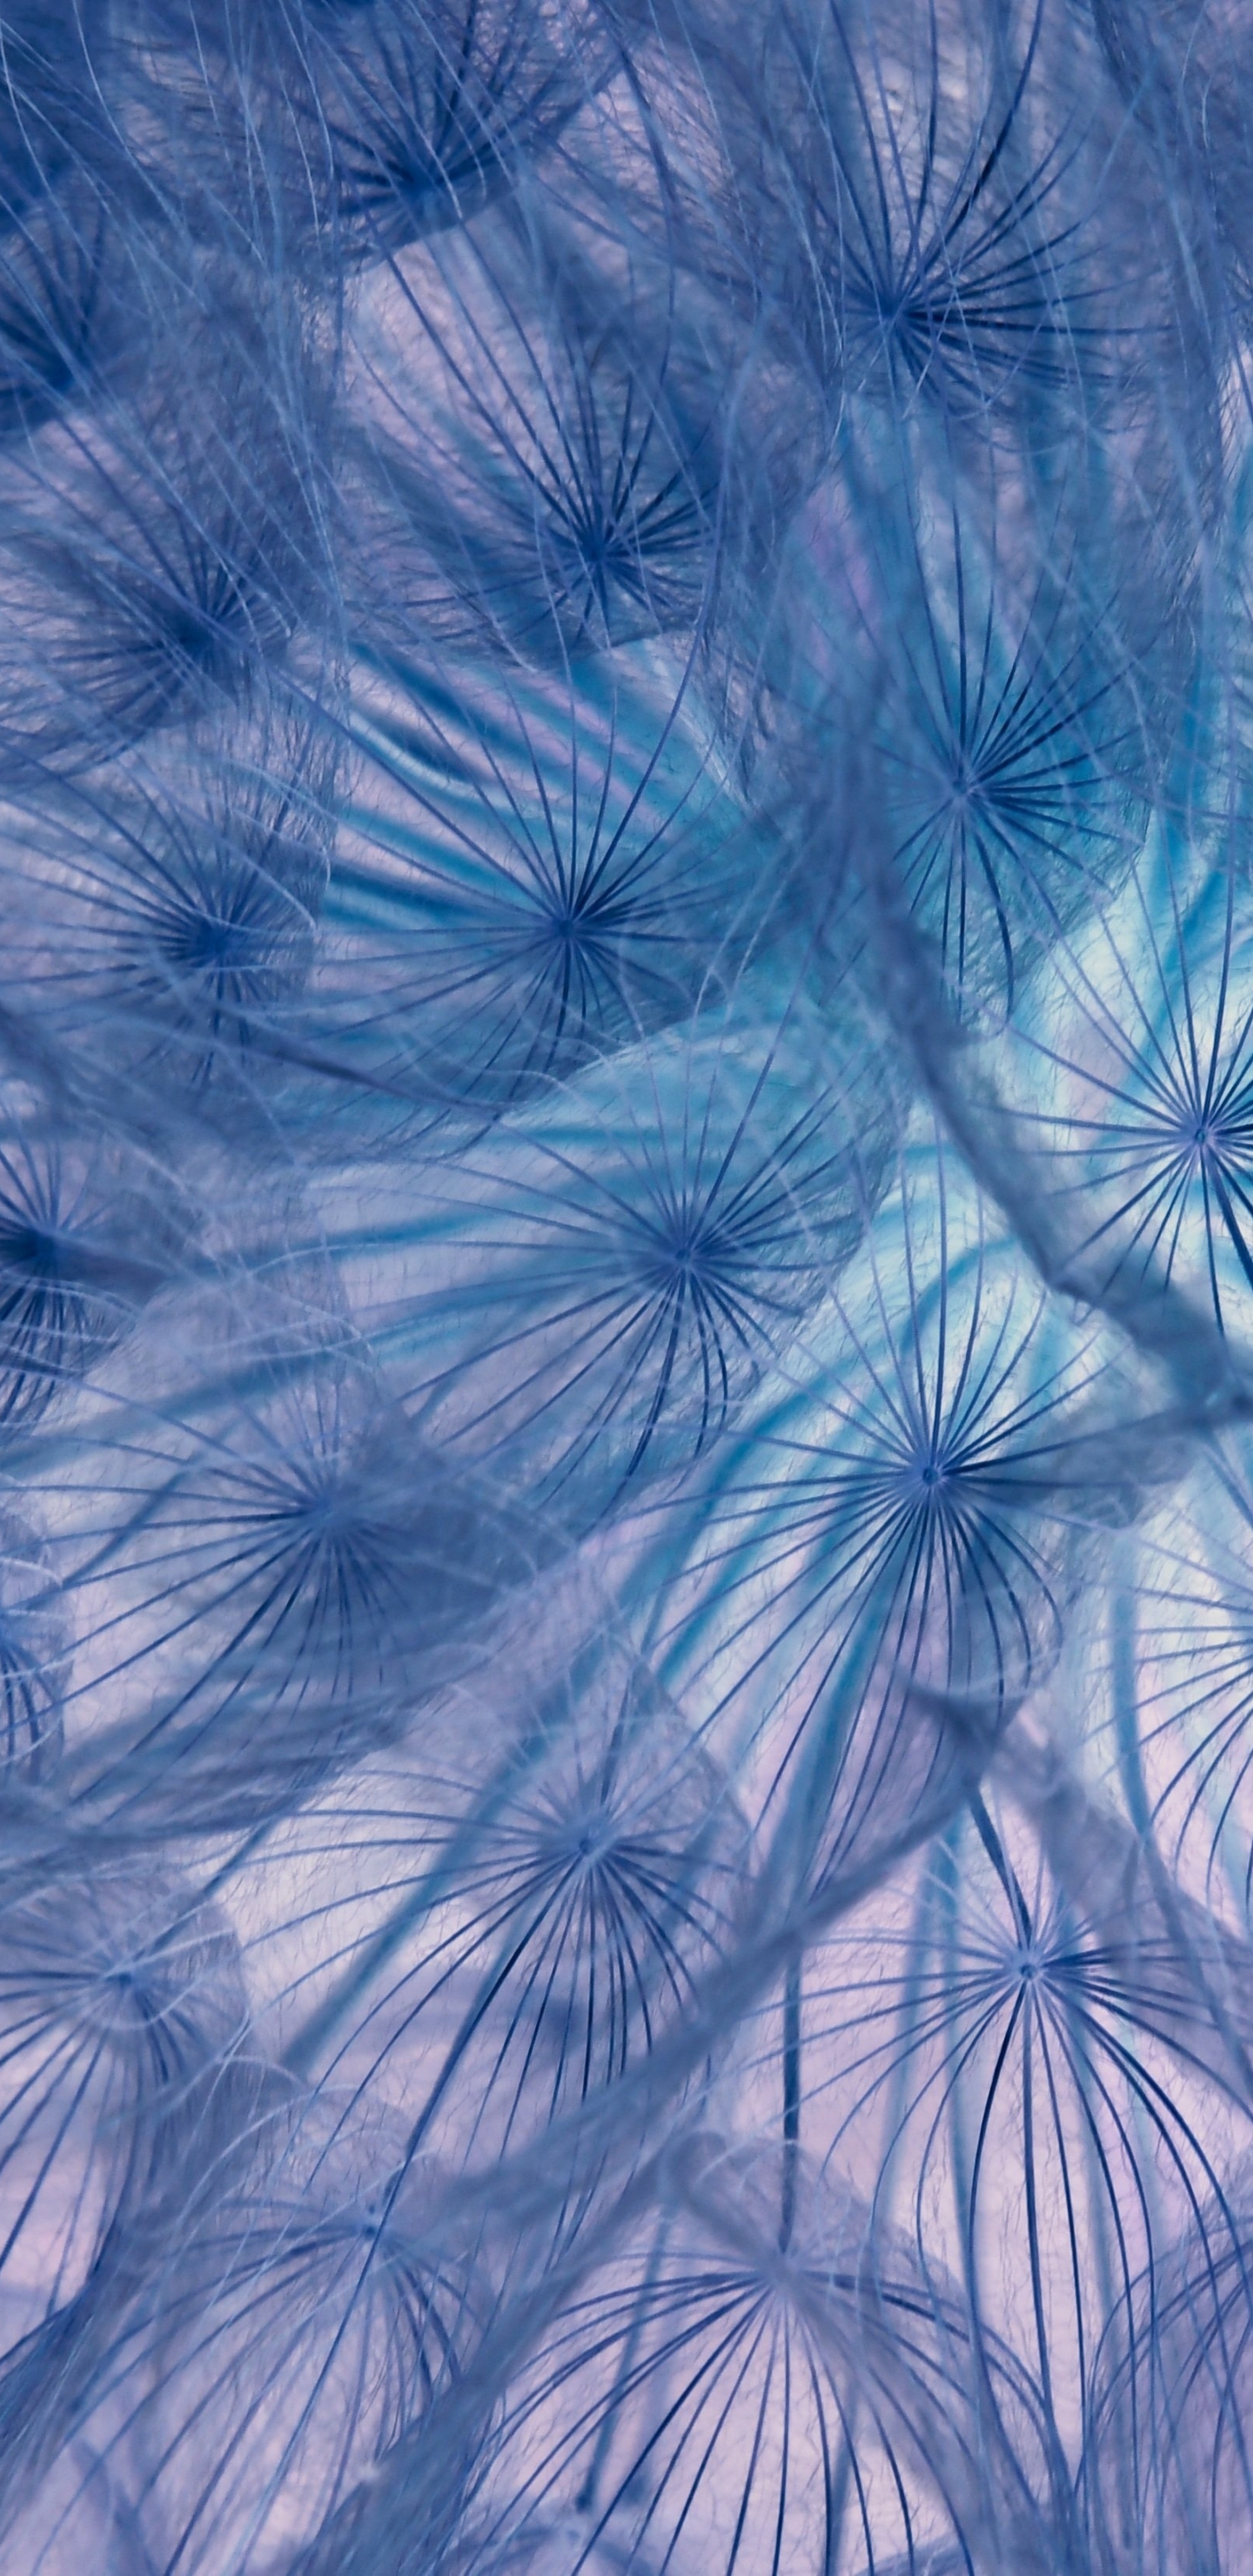 Flower, threads, close-up, dandelion, 1440x2960 wallpaper